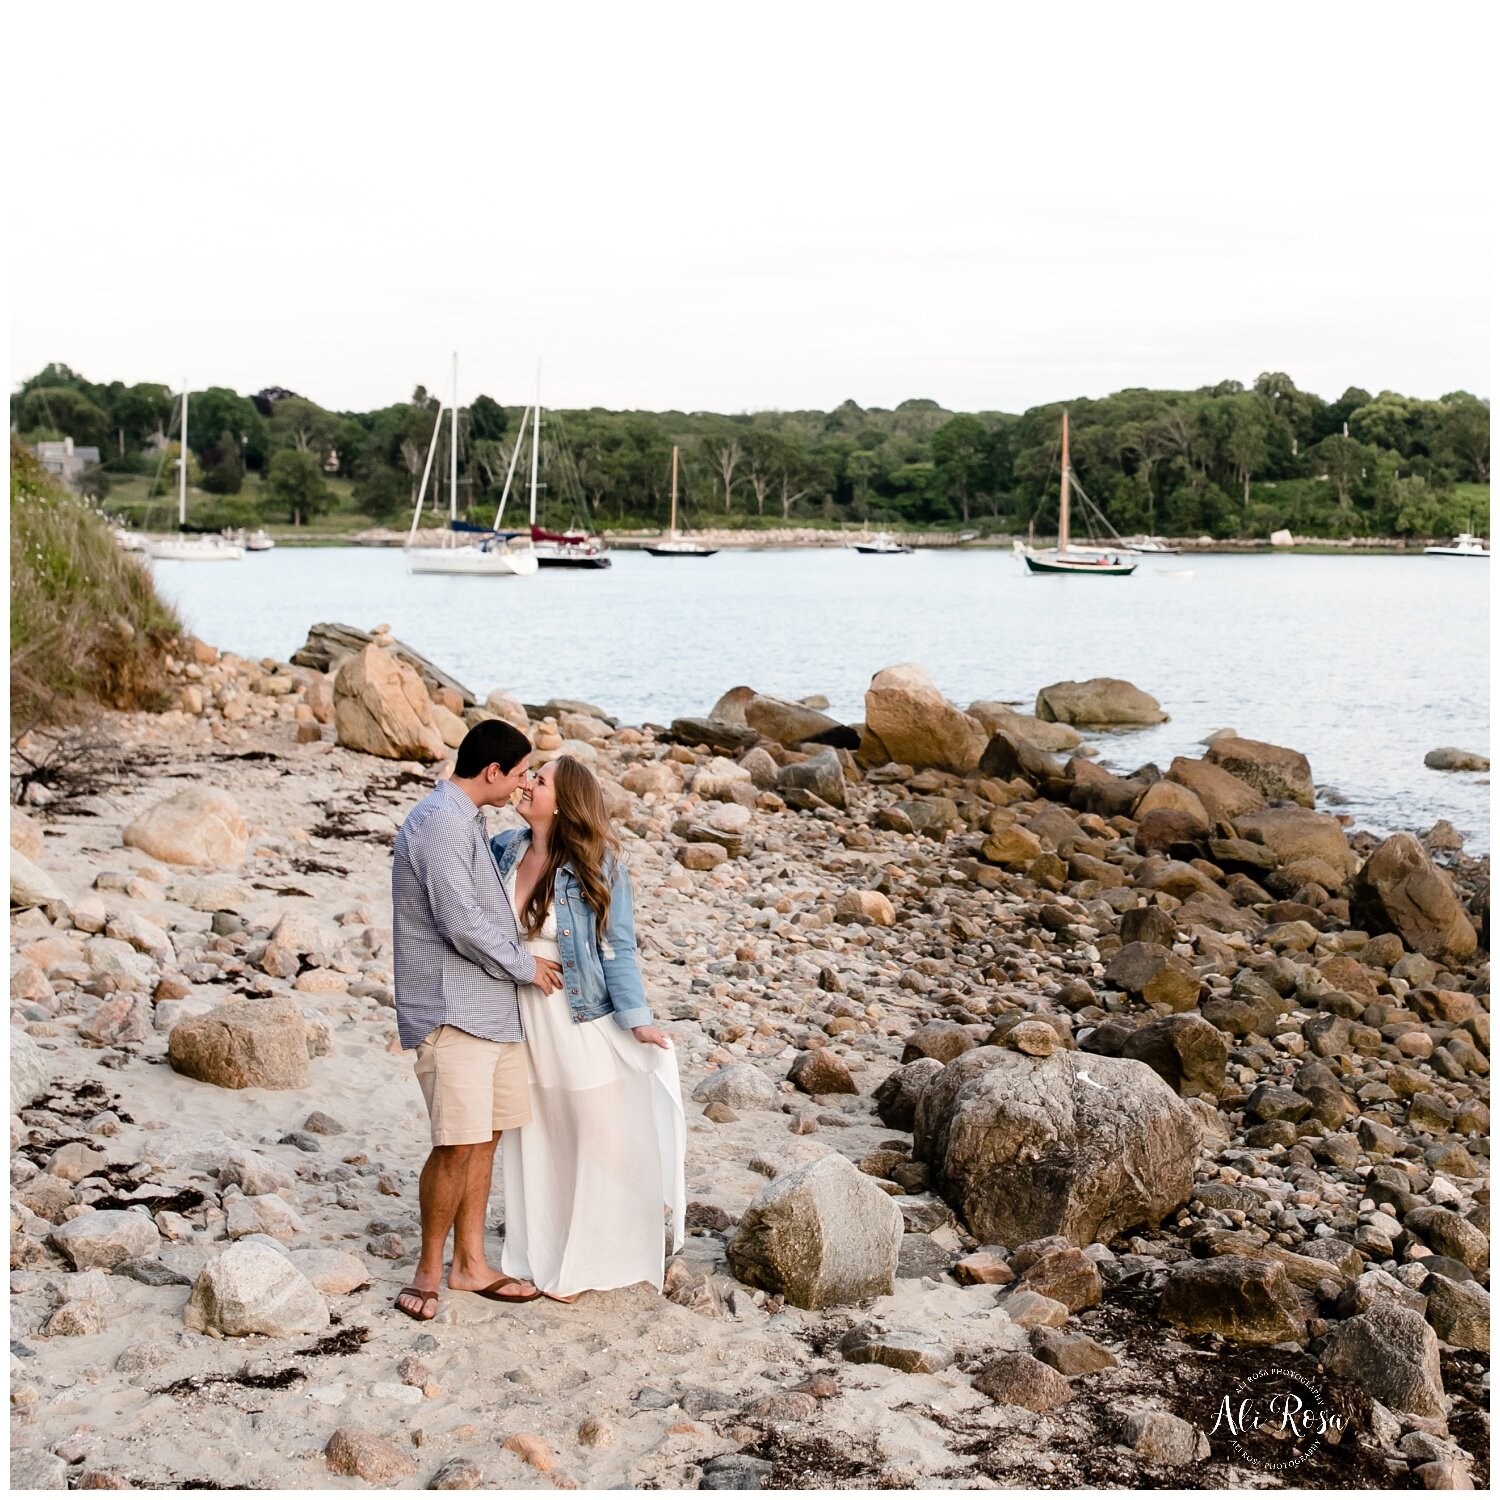 The Knob Falmouth engagement photos Boston Cape Cod wedding Photographer Ali Rosa010.jpg